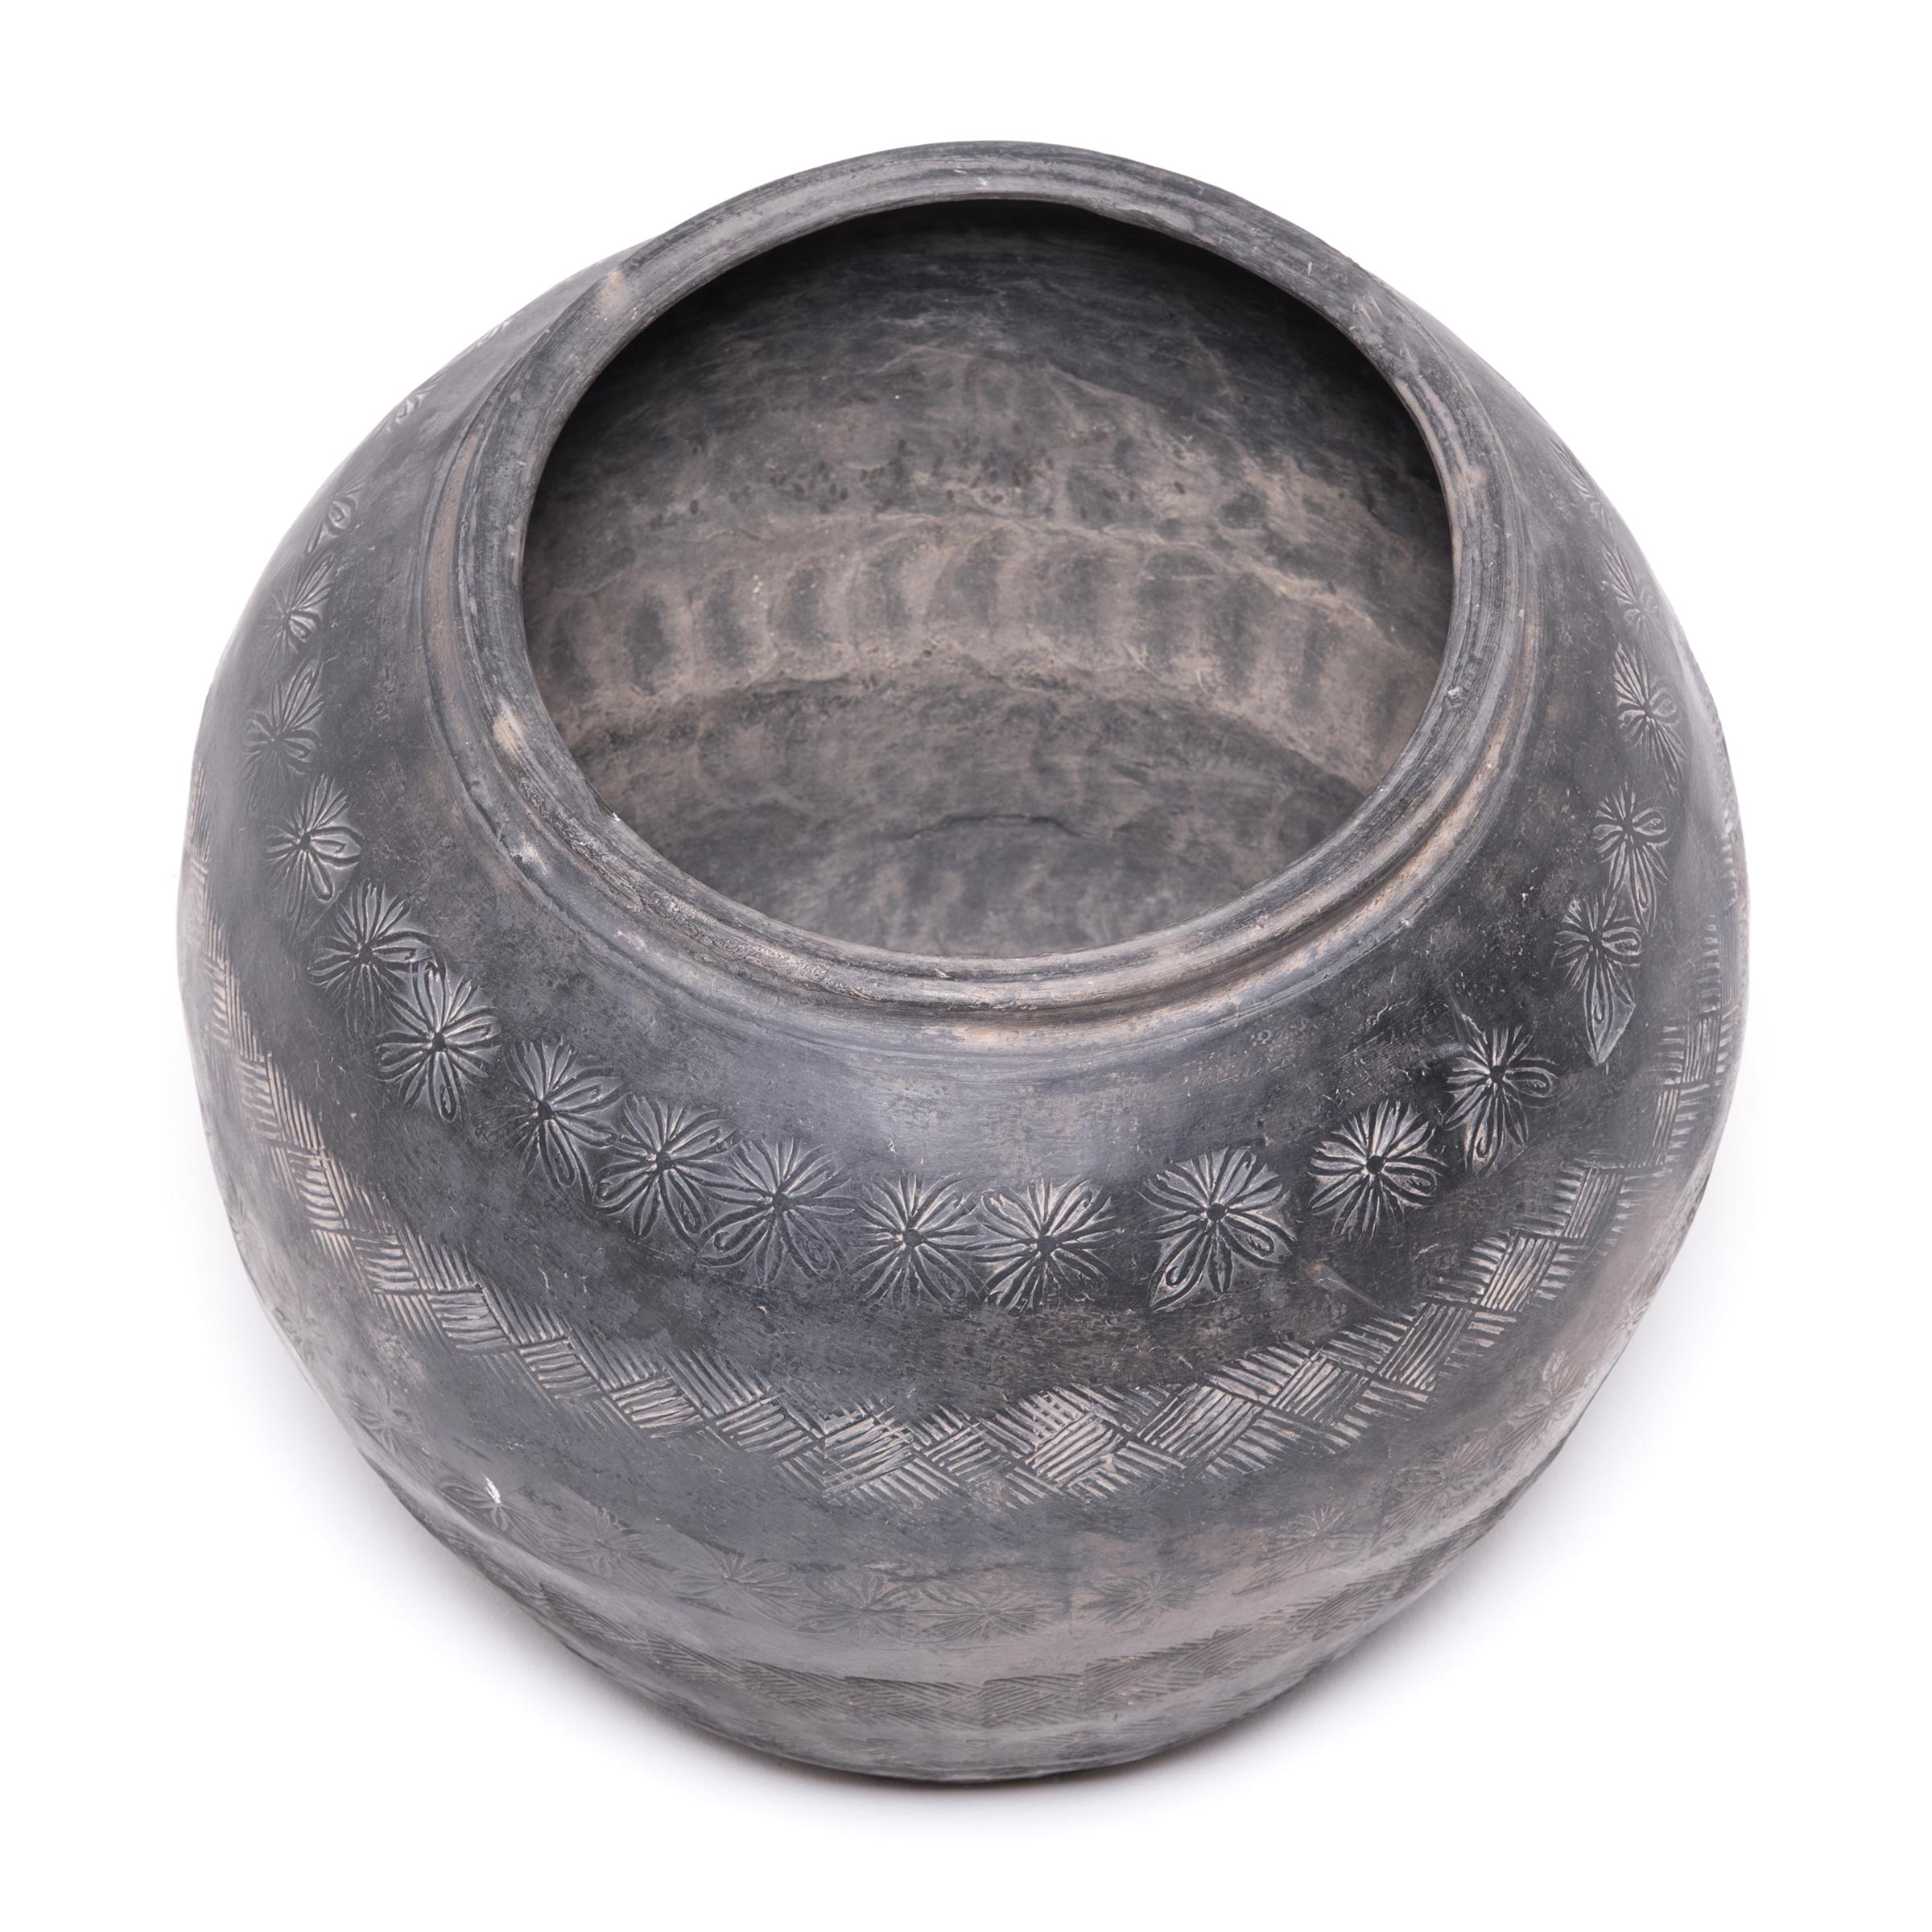 Blackened Chinese Unglazed Stamped Clay Jar